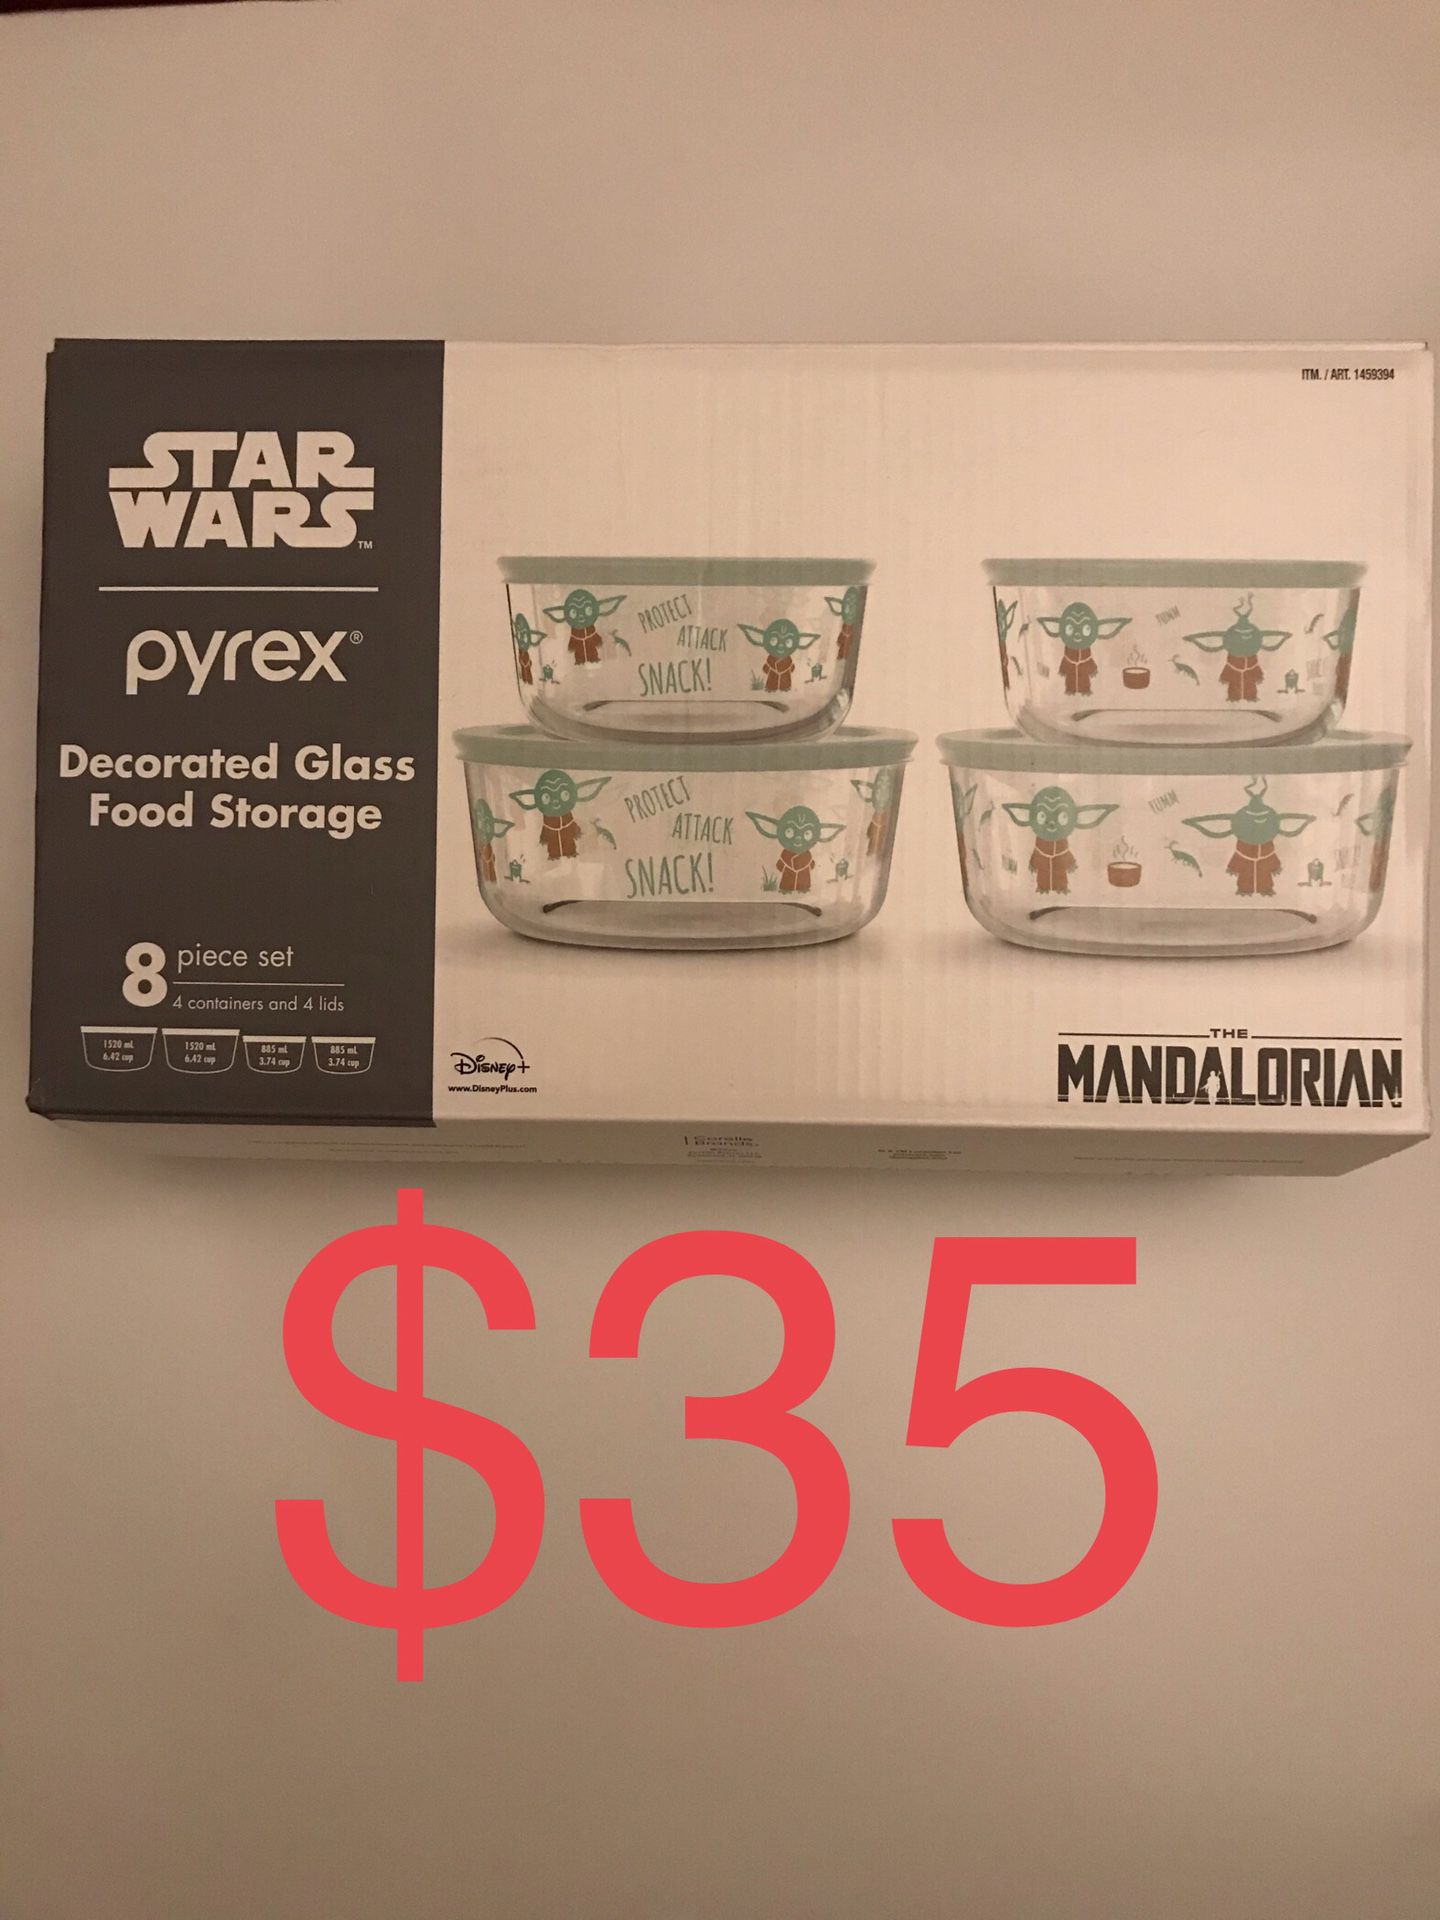 Star Wars The Mandalorian The Child Baby Yoda Pyrex Glass Food Storage Set